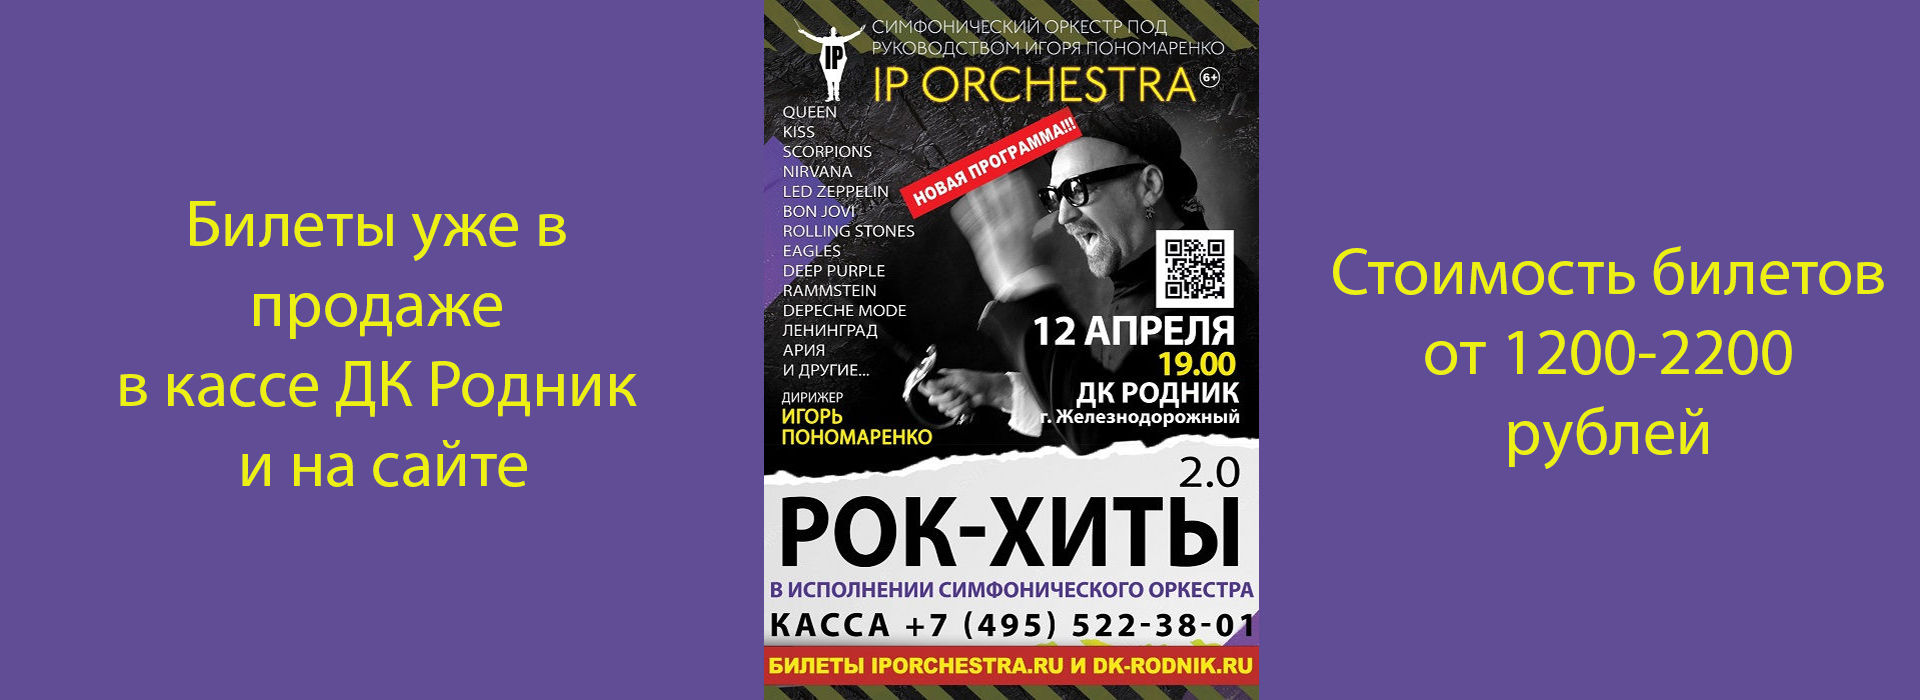 Концерт IP Orchestra